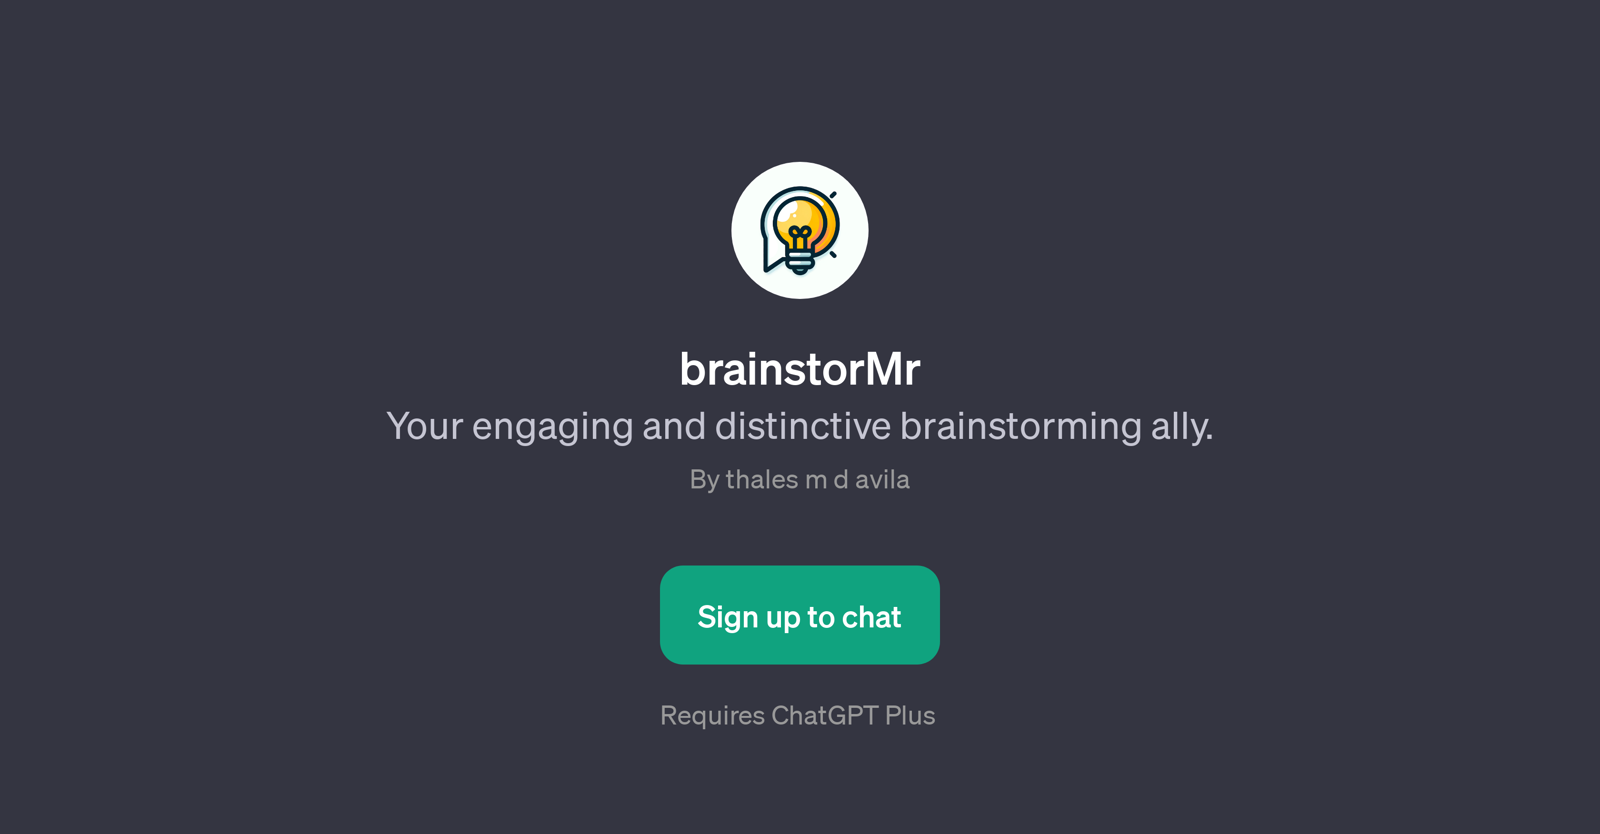 brainstorMr website